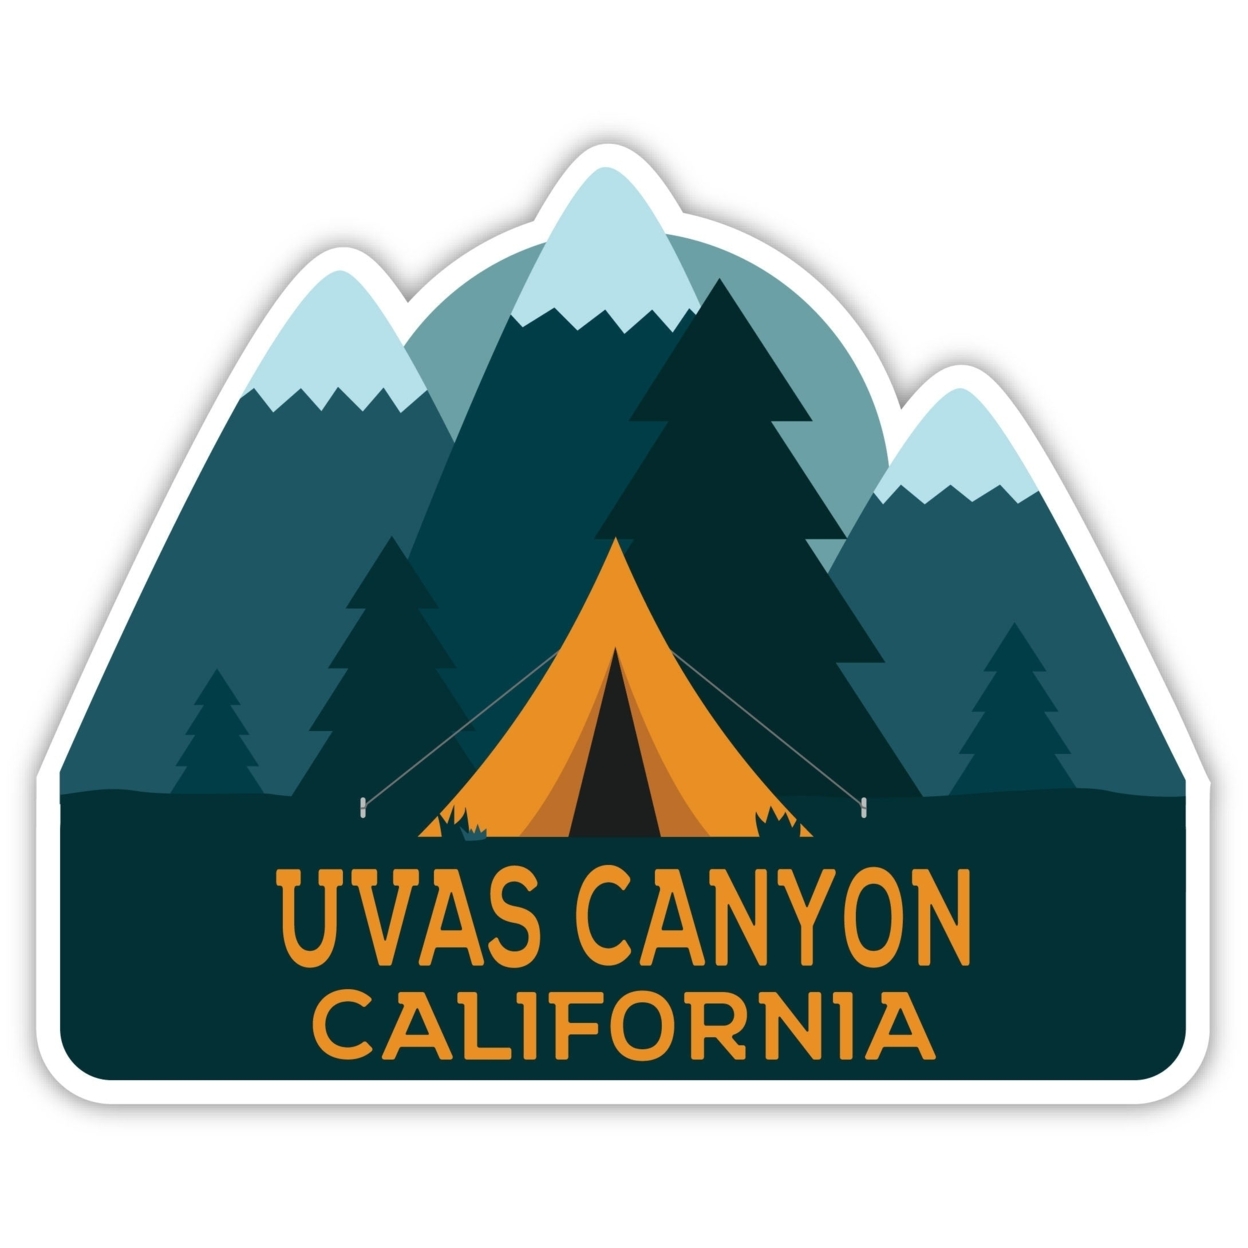 Uvas Canyon California Souvenir Decorative Stickers (Choose Theme And Size) - Single Unit, 4-Inch, Tent